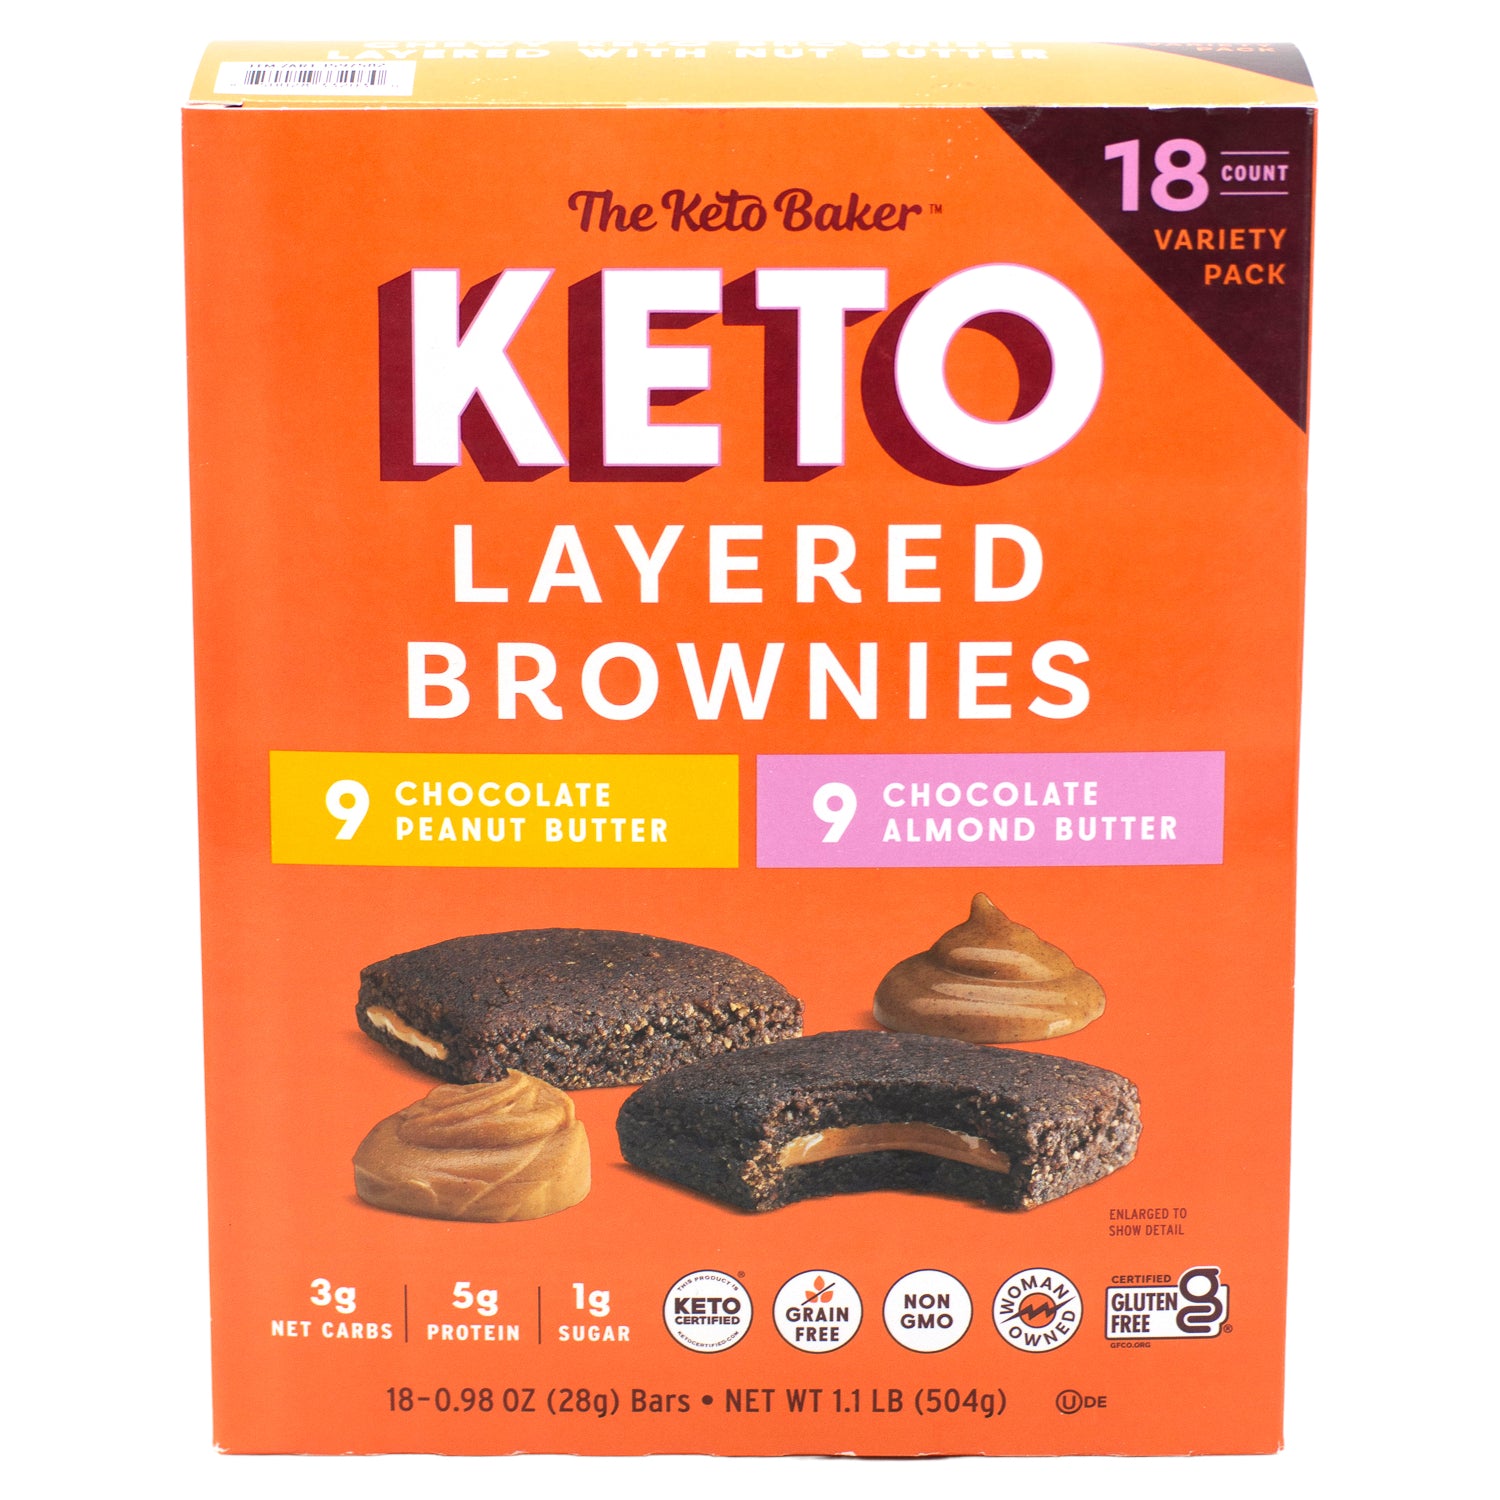 The Keto Baker Keto Layered Brownies The Keto Baker Variety 0.98 Oz-18 Count 